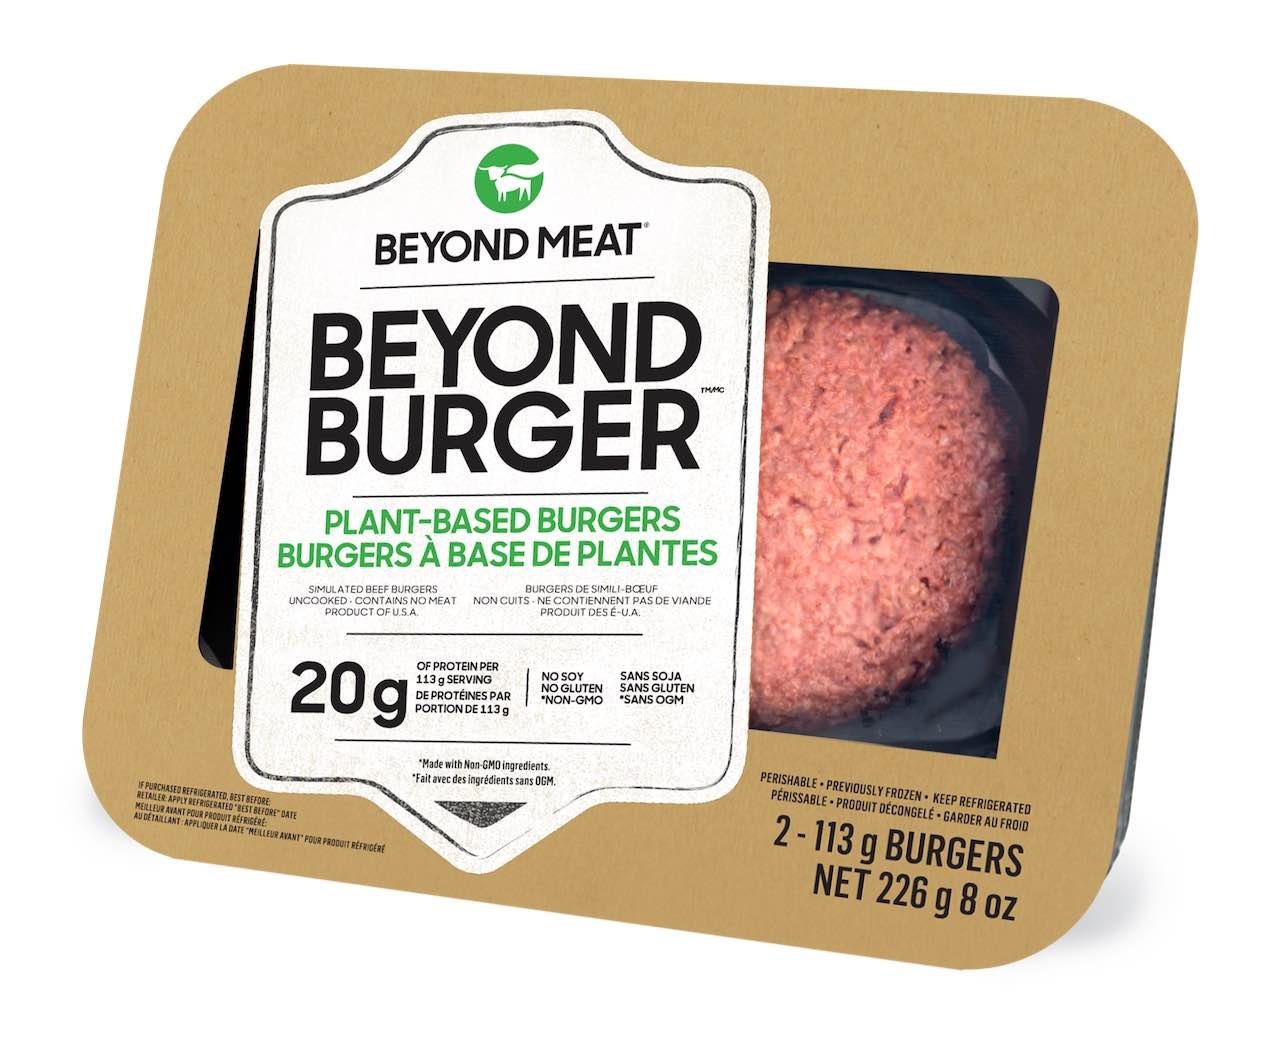 Beyond Meat Beyond Burger in its packaging.